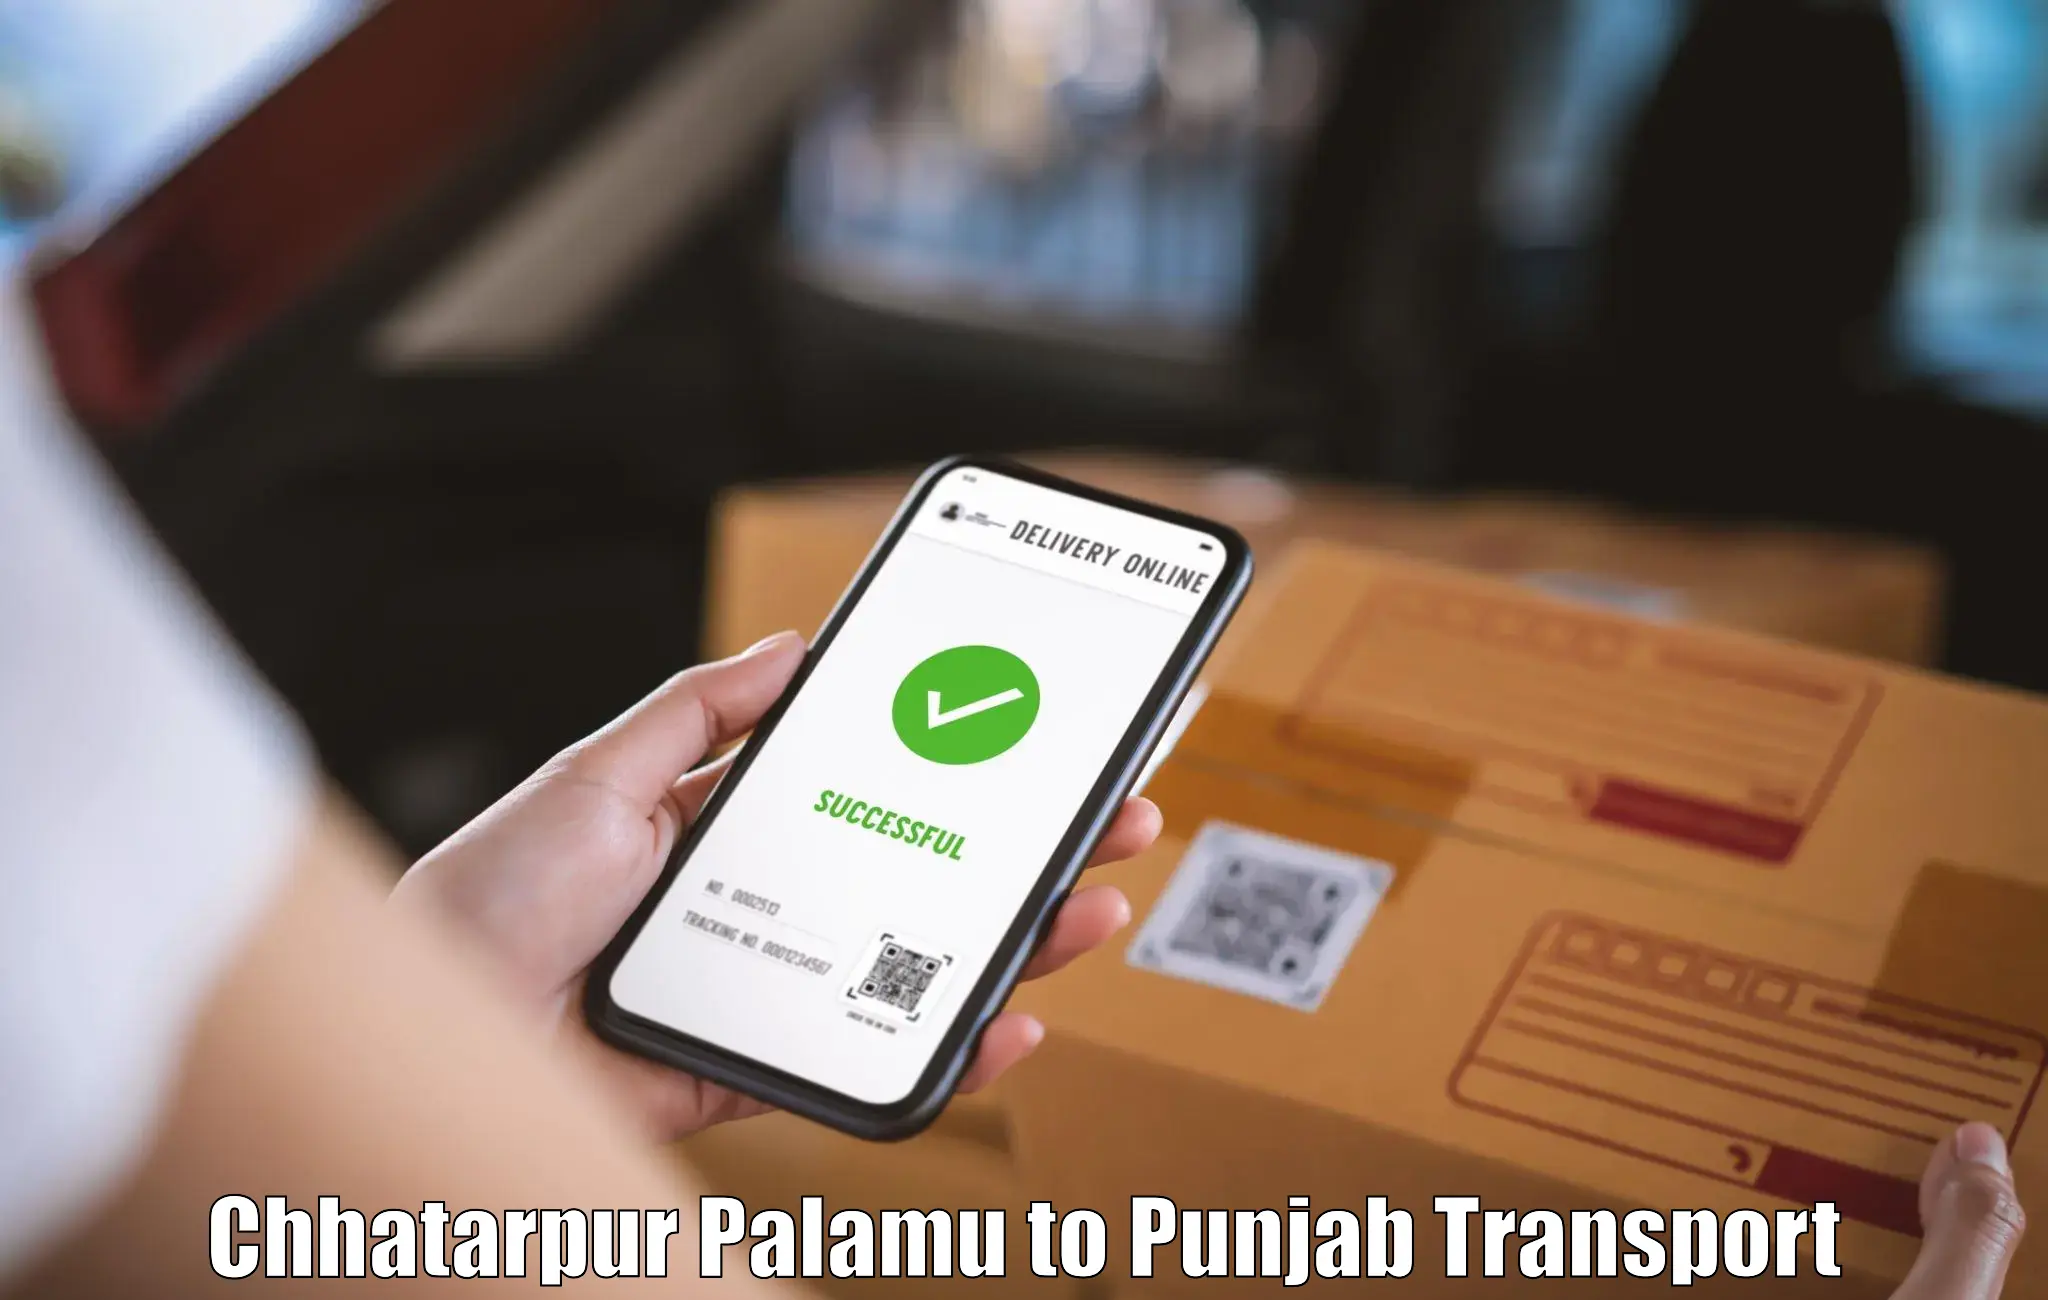 Pick up transport service Chhatarpur Palamu to Phagwara